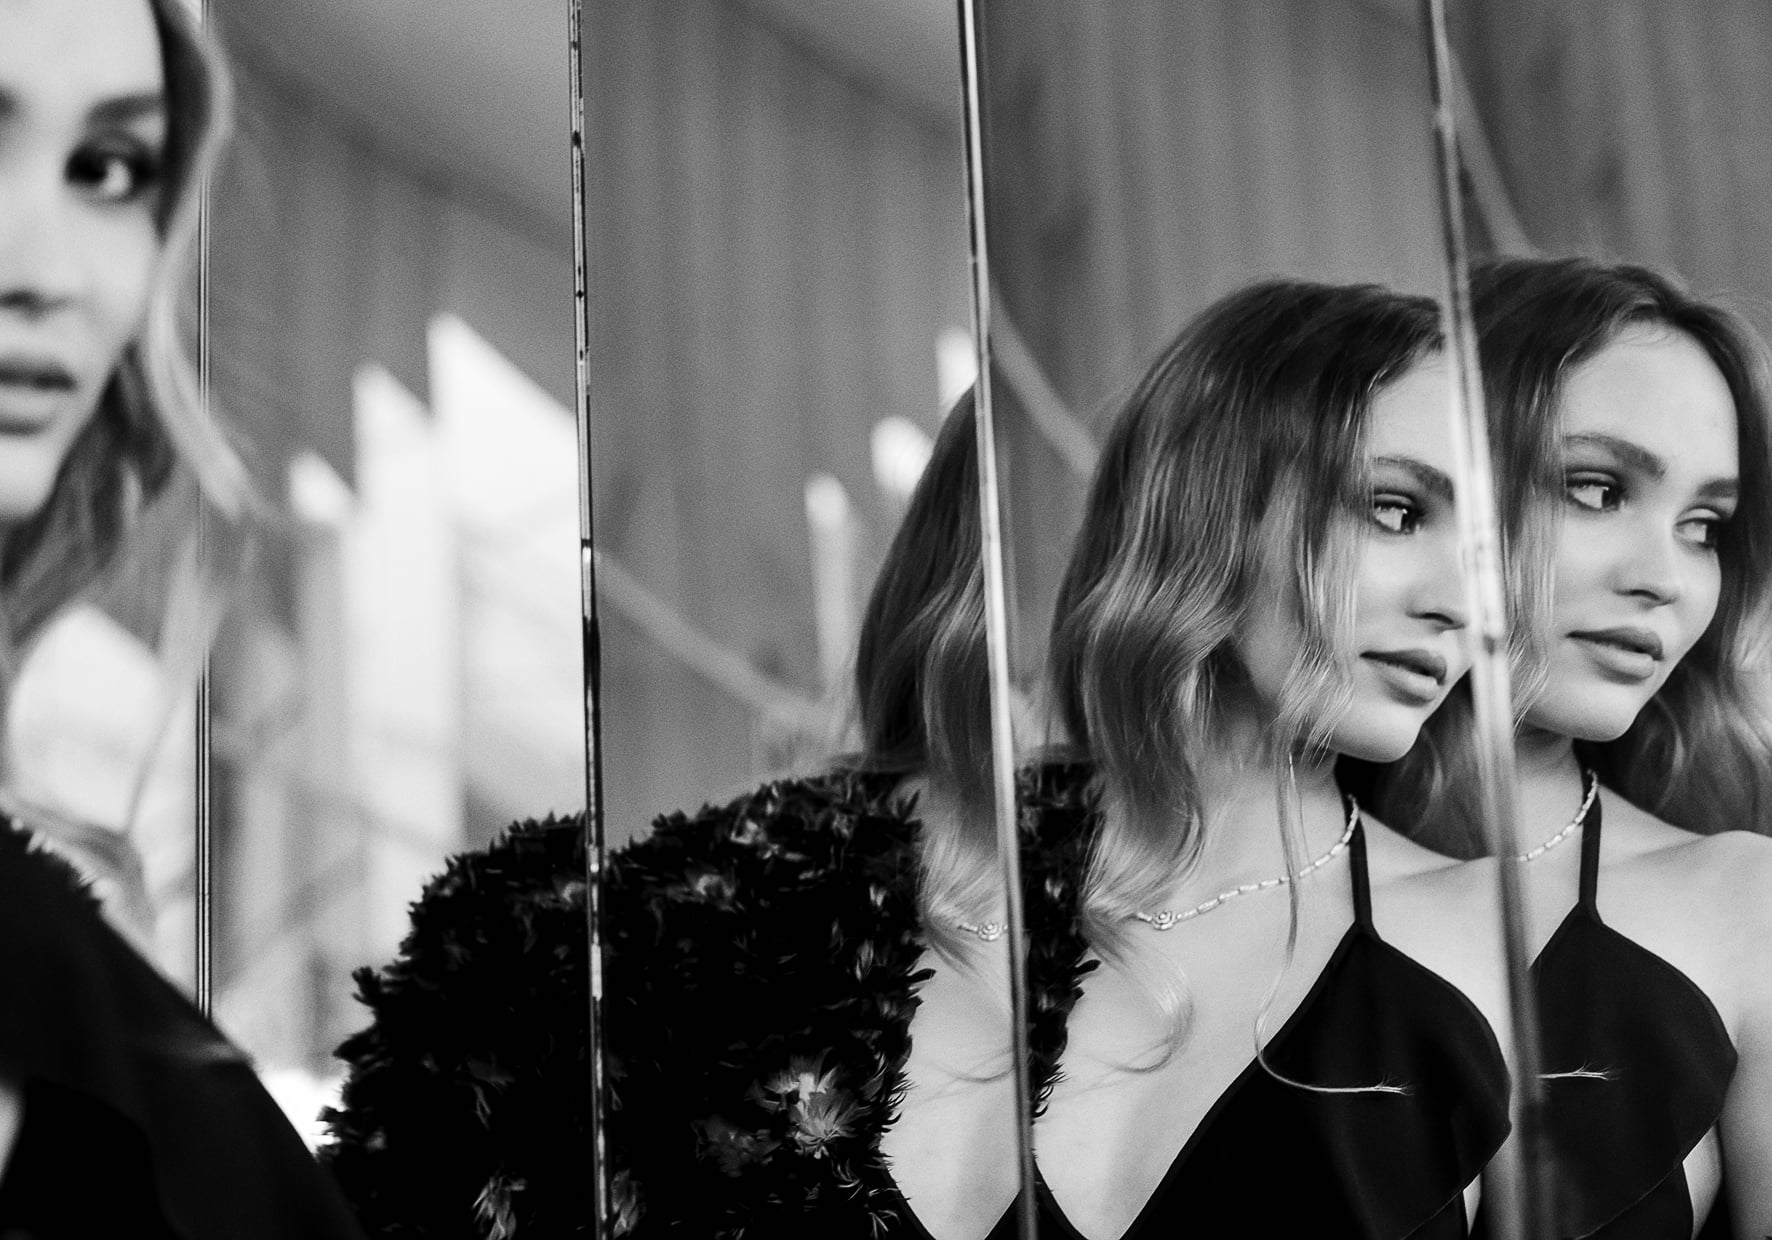 Lily-Rose Depp chosen as new ambassador for Chanel